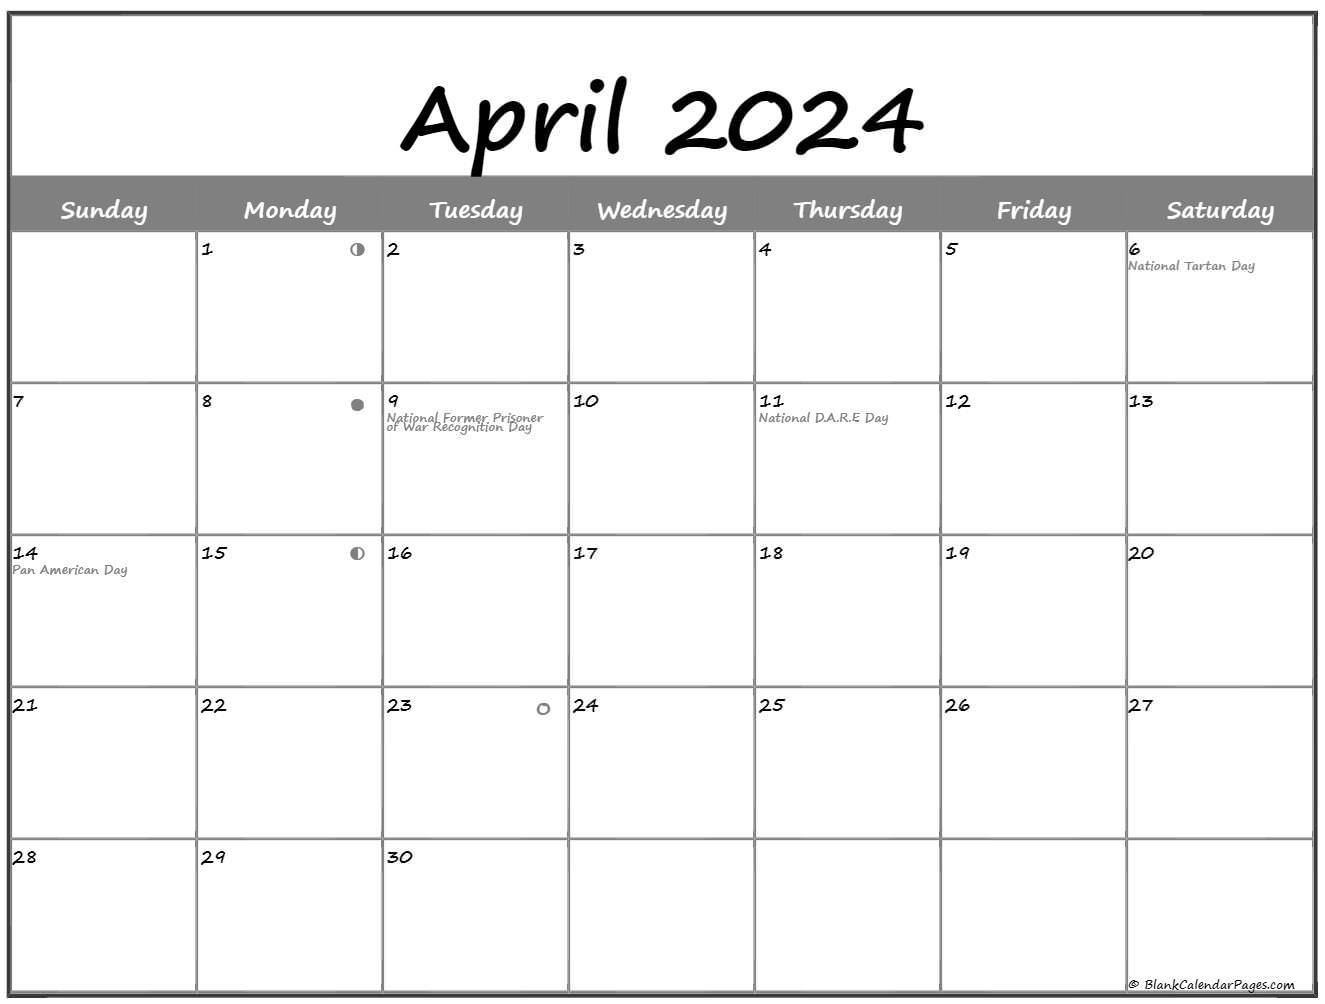 April 2022 Lunar Calendar Moon Phase Calendar